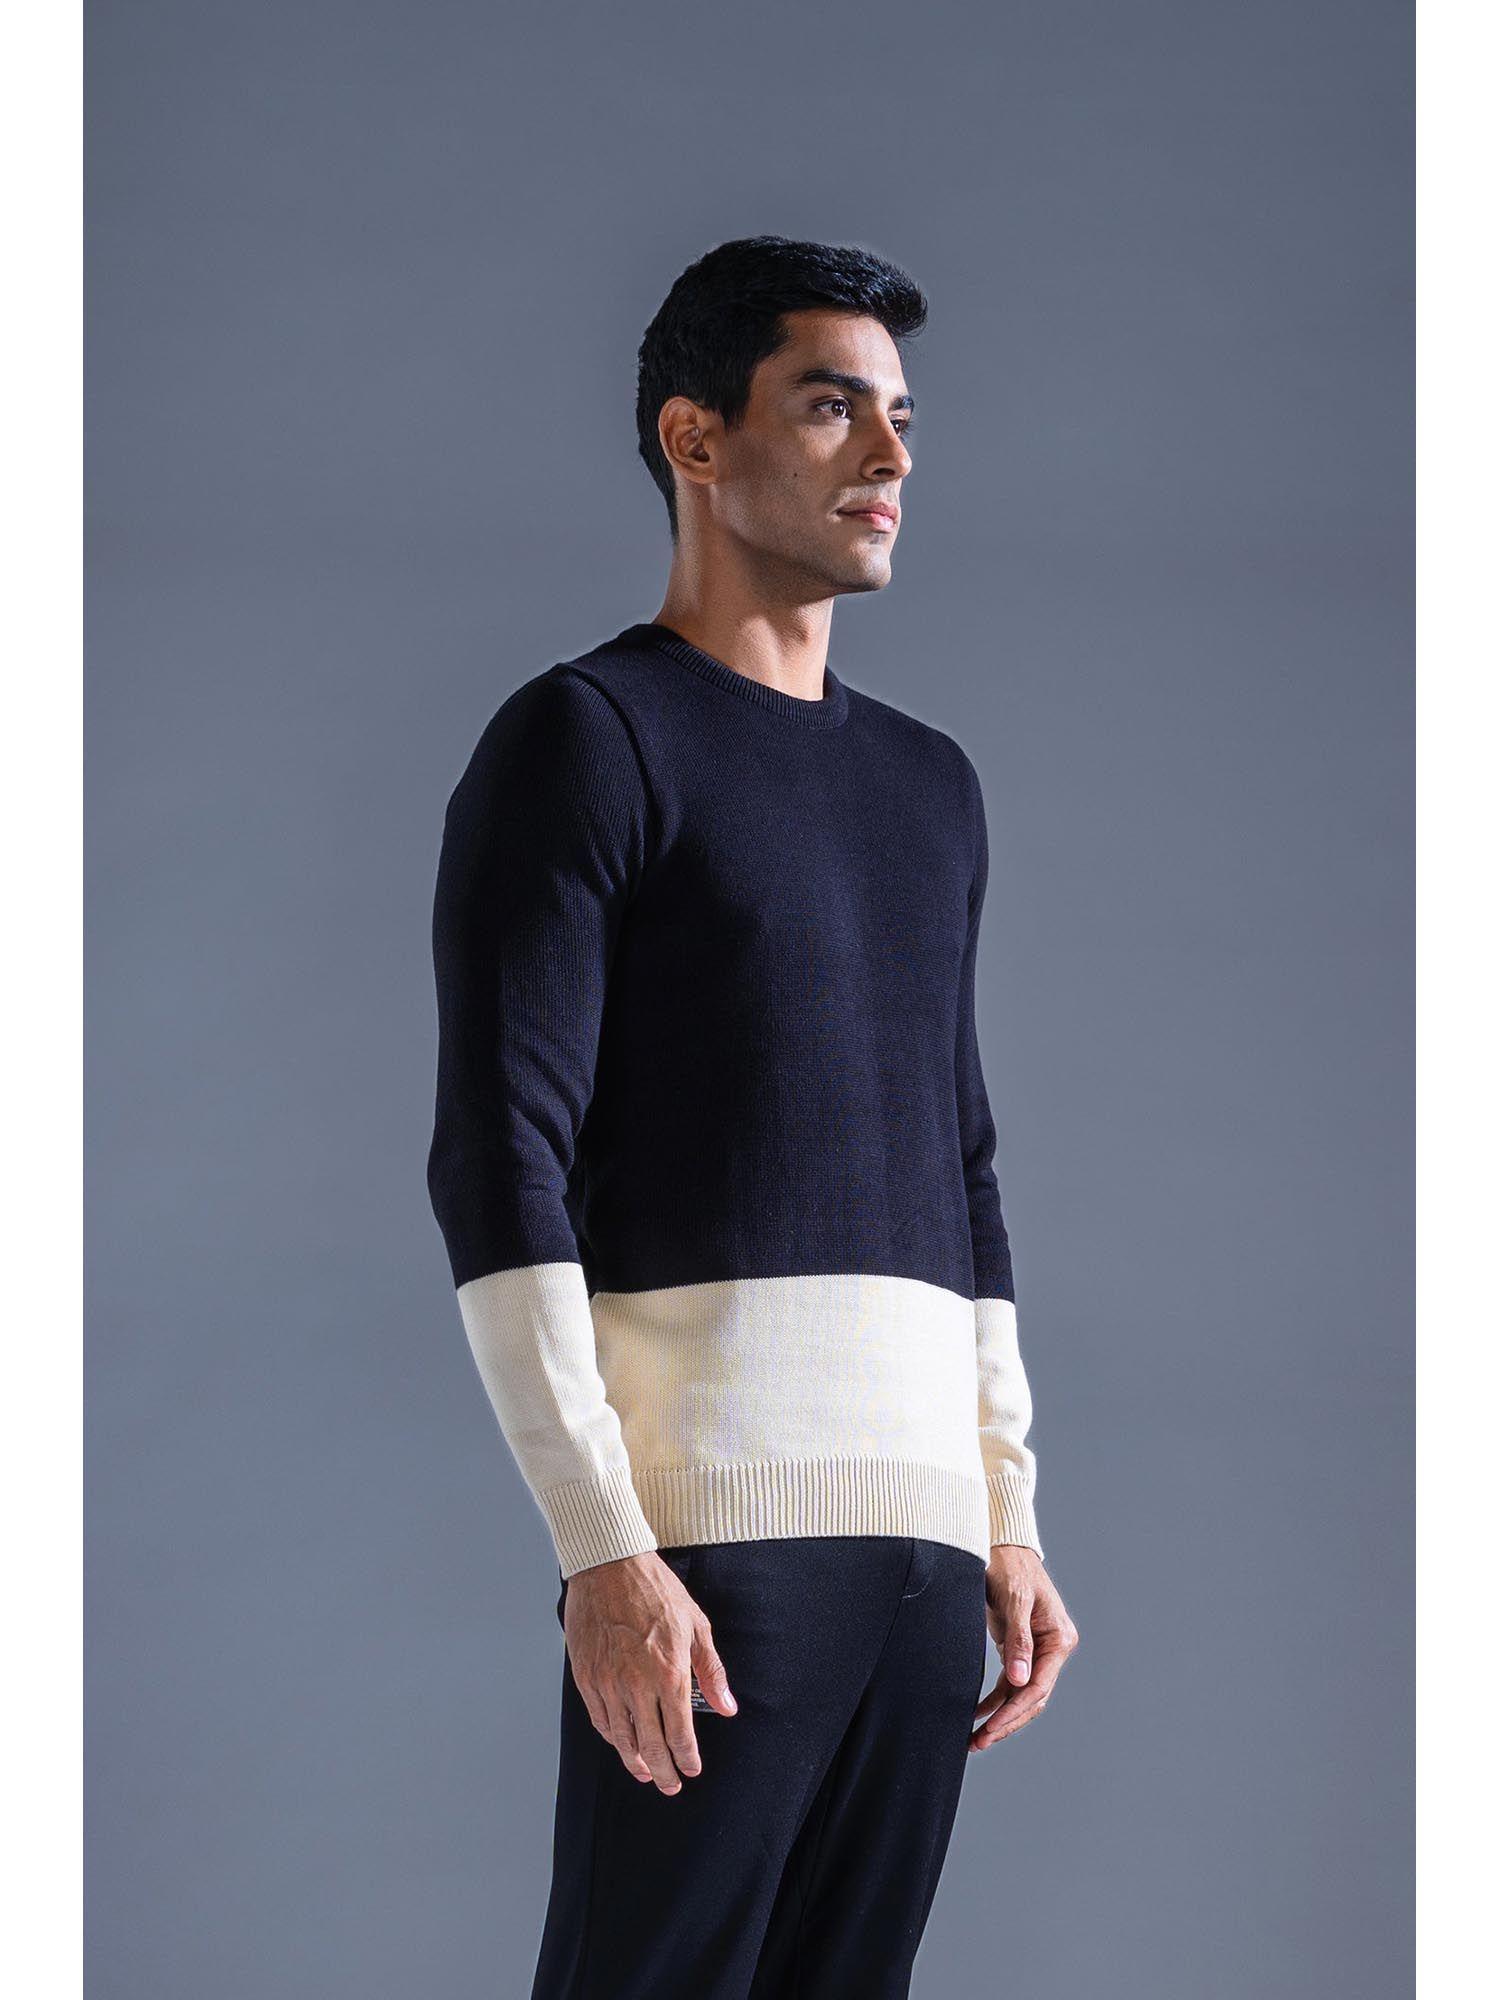 black cotton knit sweater panel sweater